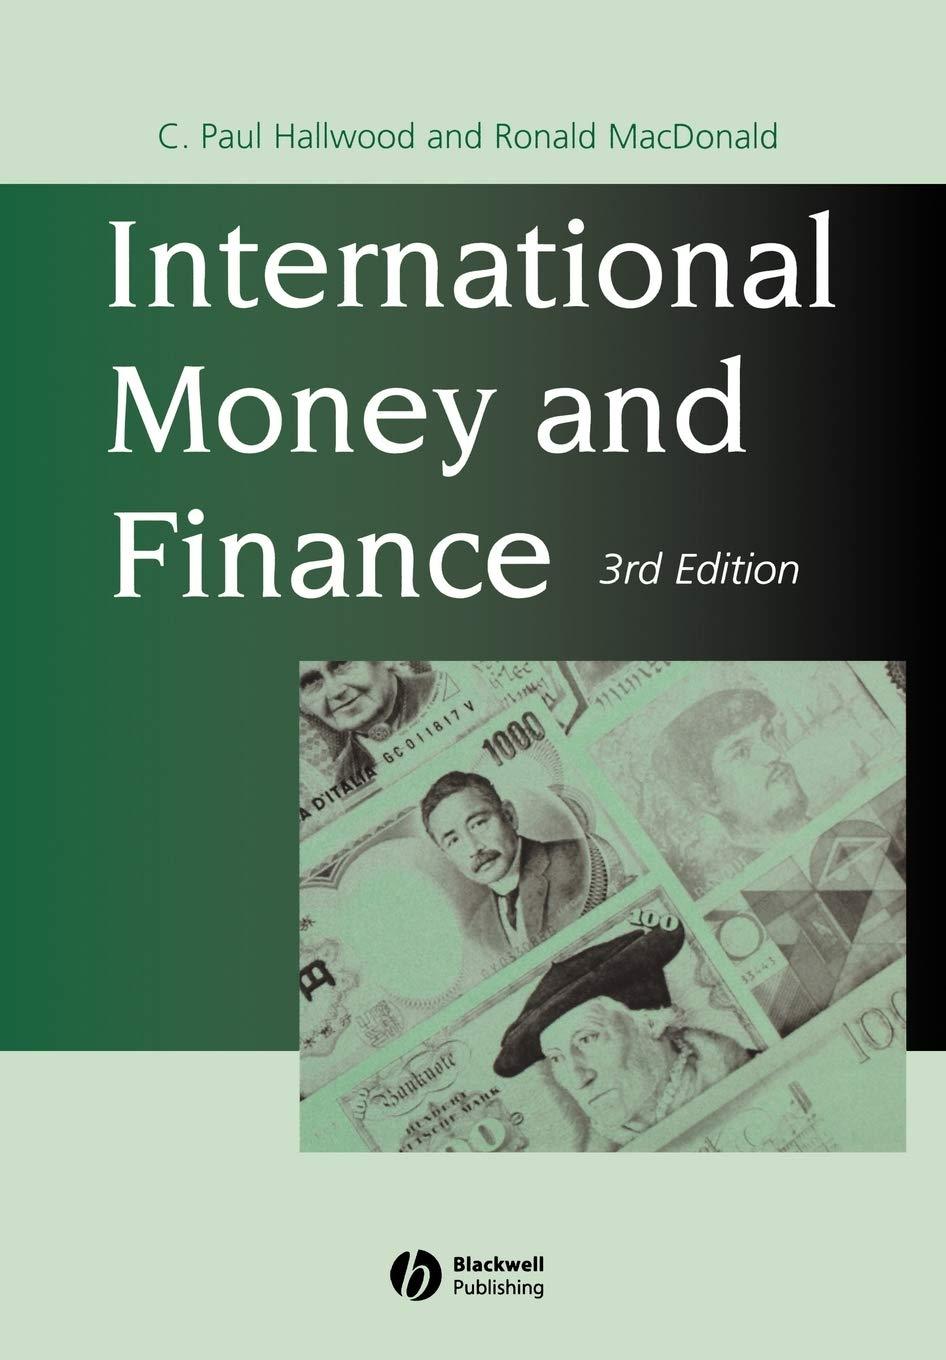 international money and finance 3rd edition c. paul hallwood, ronald macdonald 0631204628, 978-0631204626